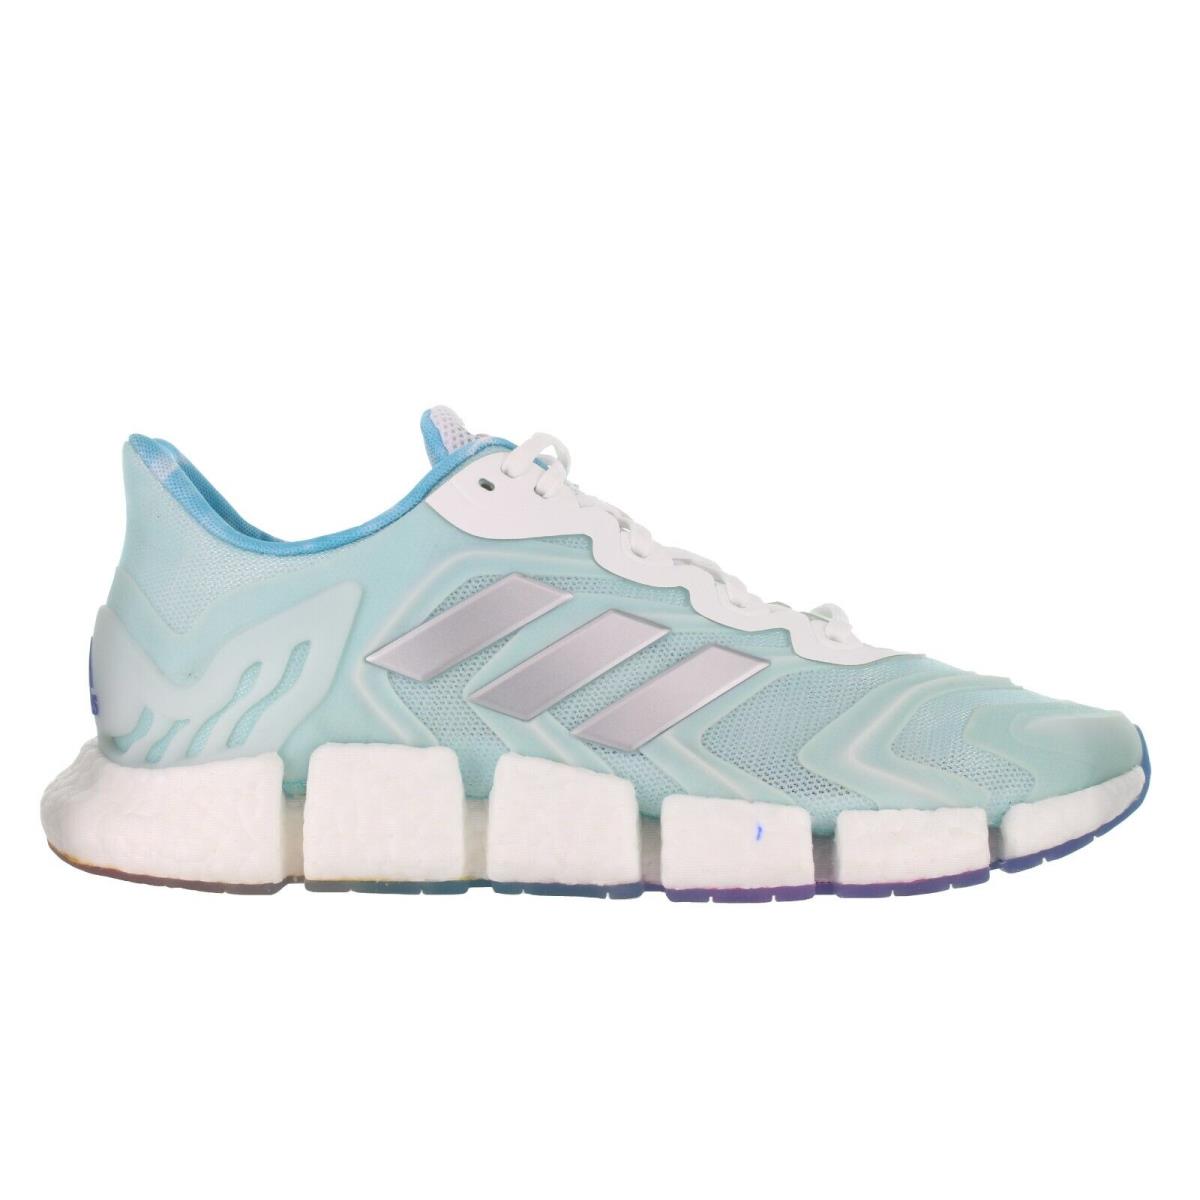 Adidas shoes Climacool Vento - Cloud White, Pulse Aqua, Silver Metallic 0